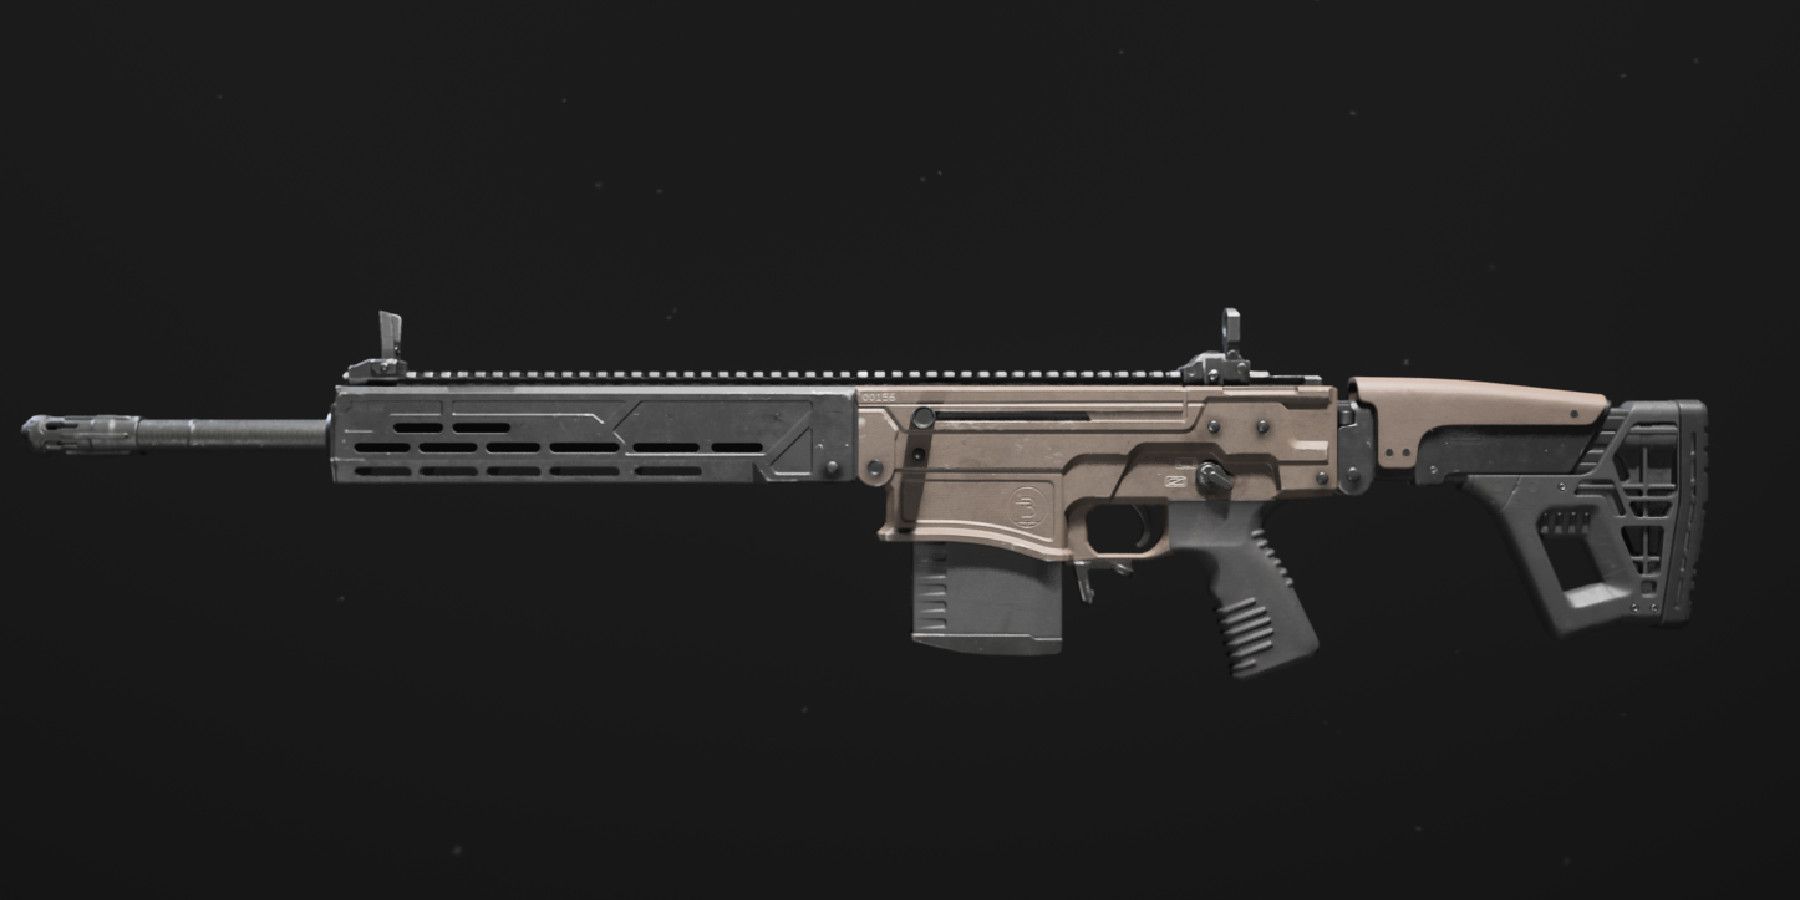 mw3 - weapon camos - kvd enforcer